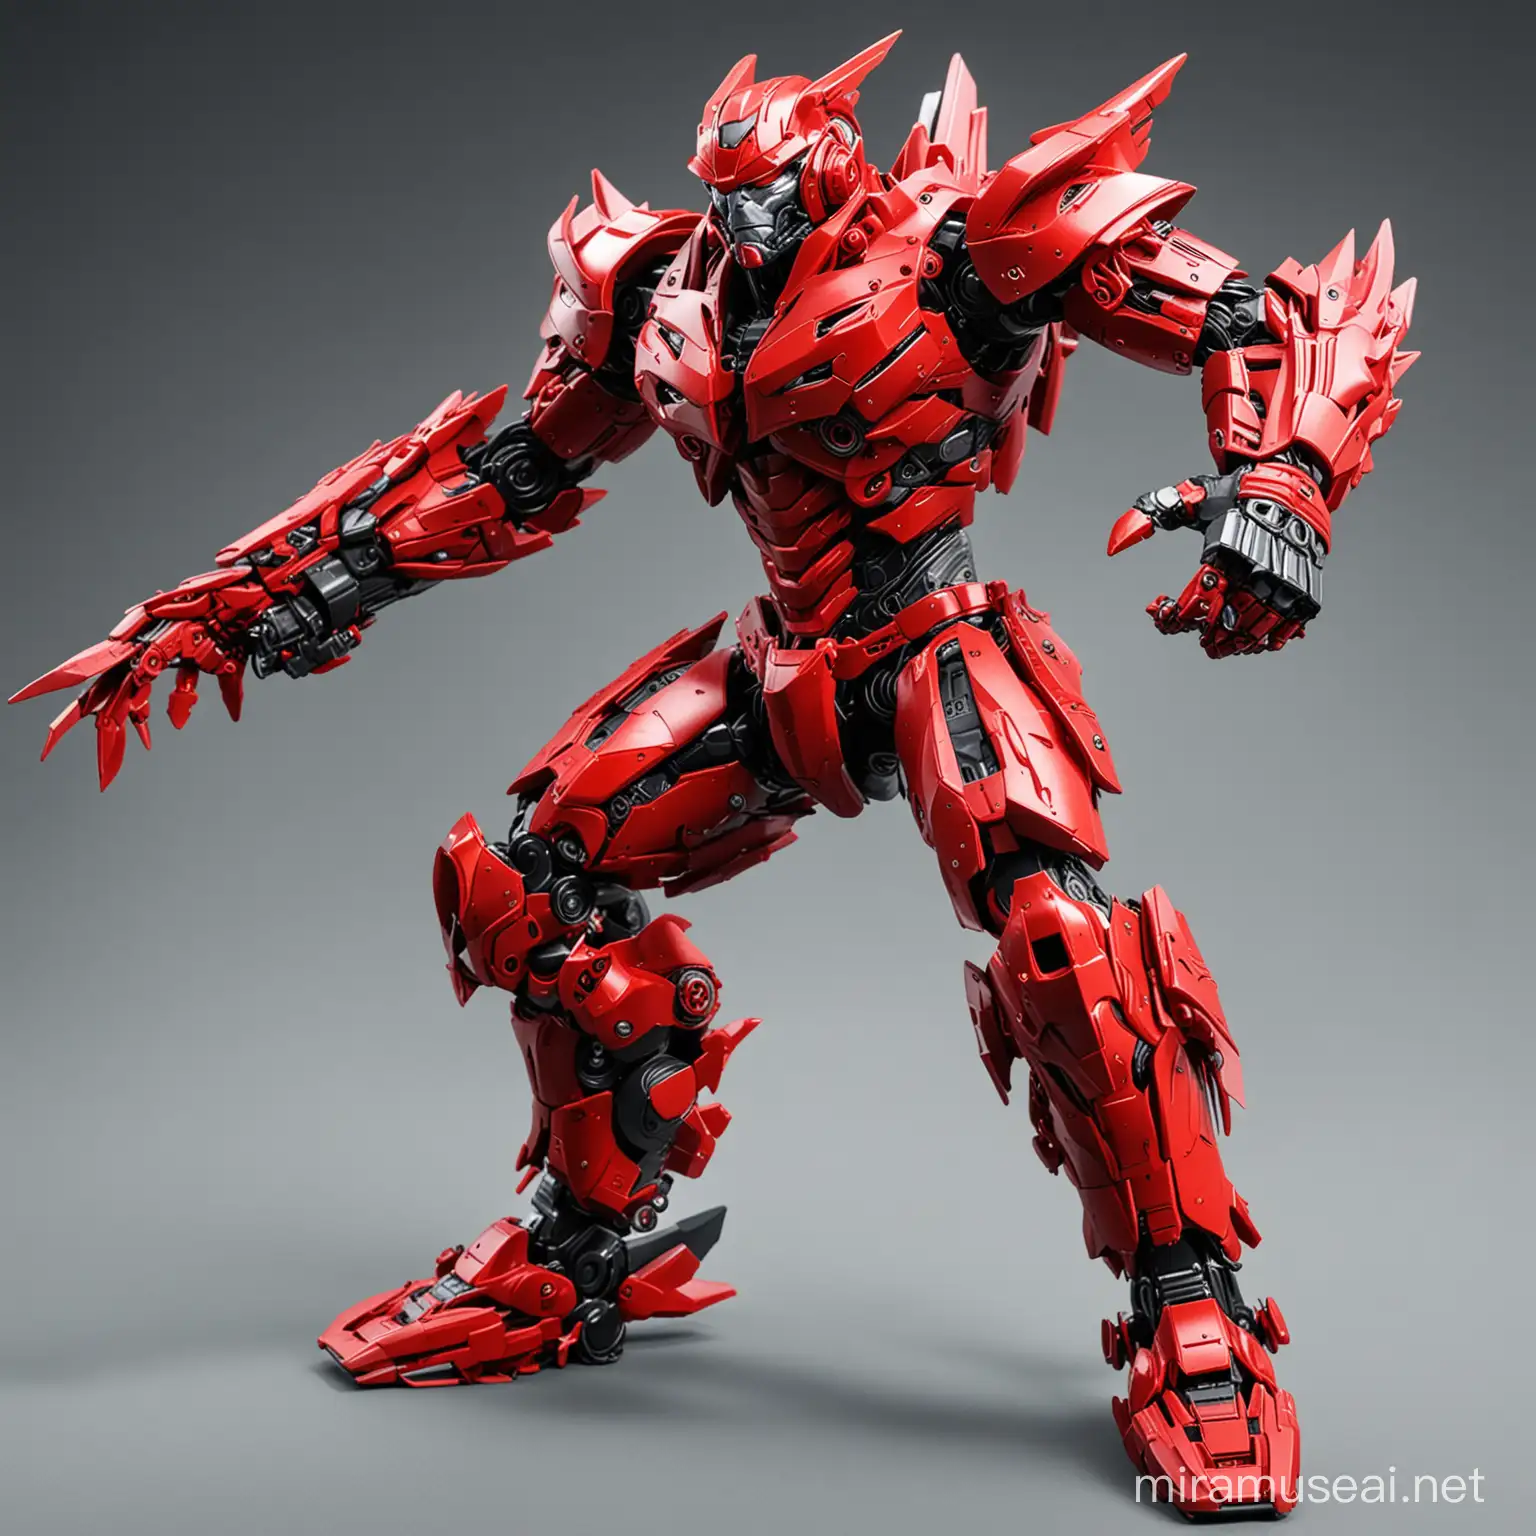 Red Fish Man Transformer in Battle Mode